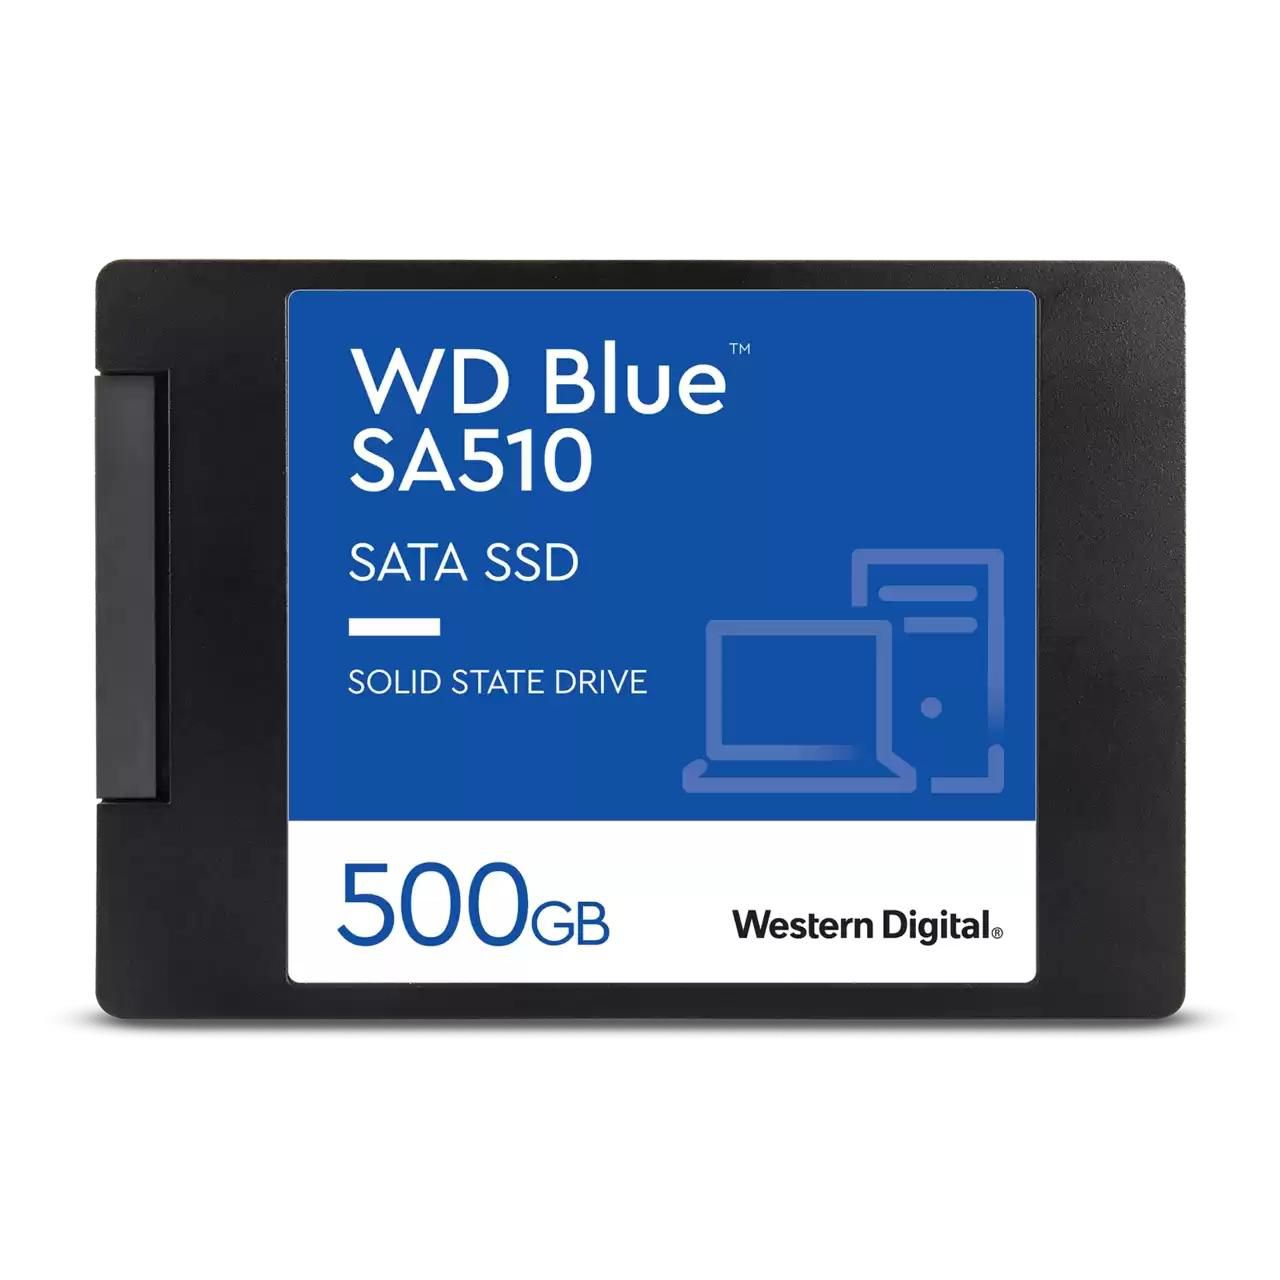 WESTERN DIGITAL WD BLUE SA510 SATA 500GB SSD